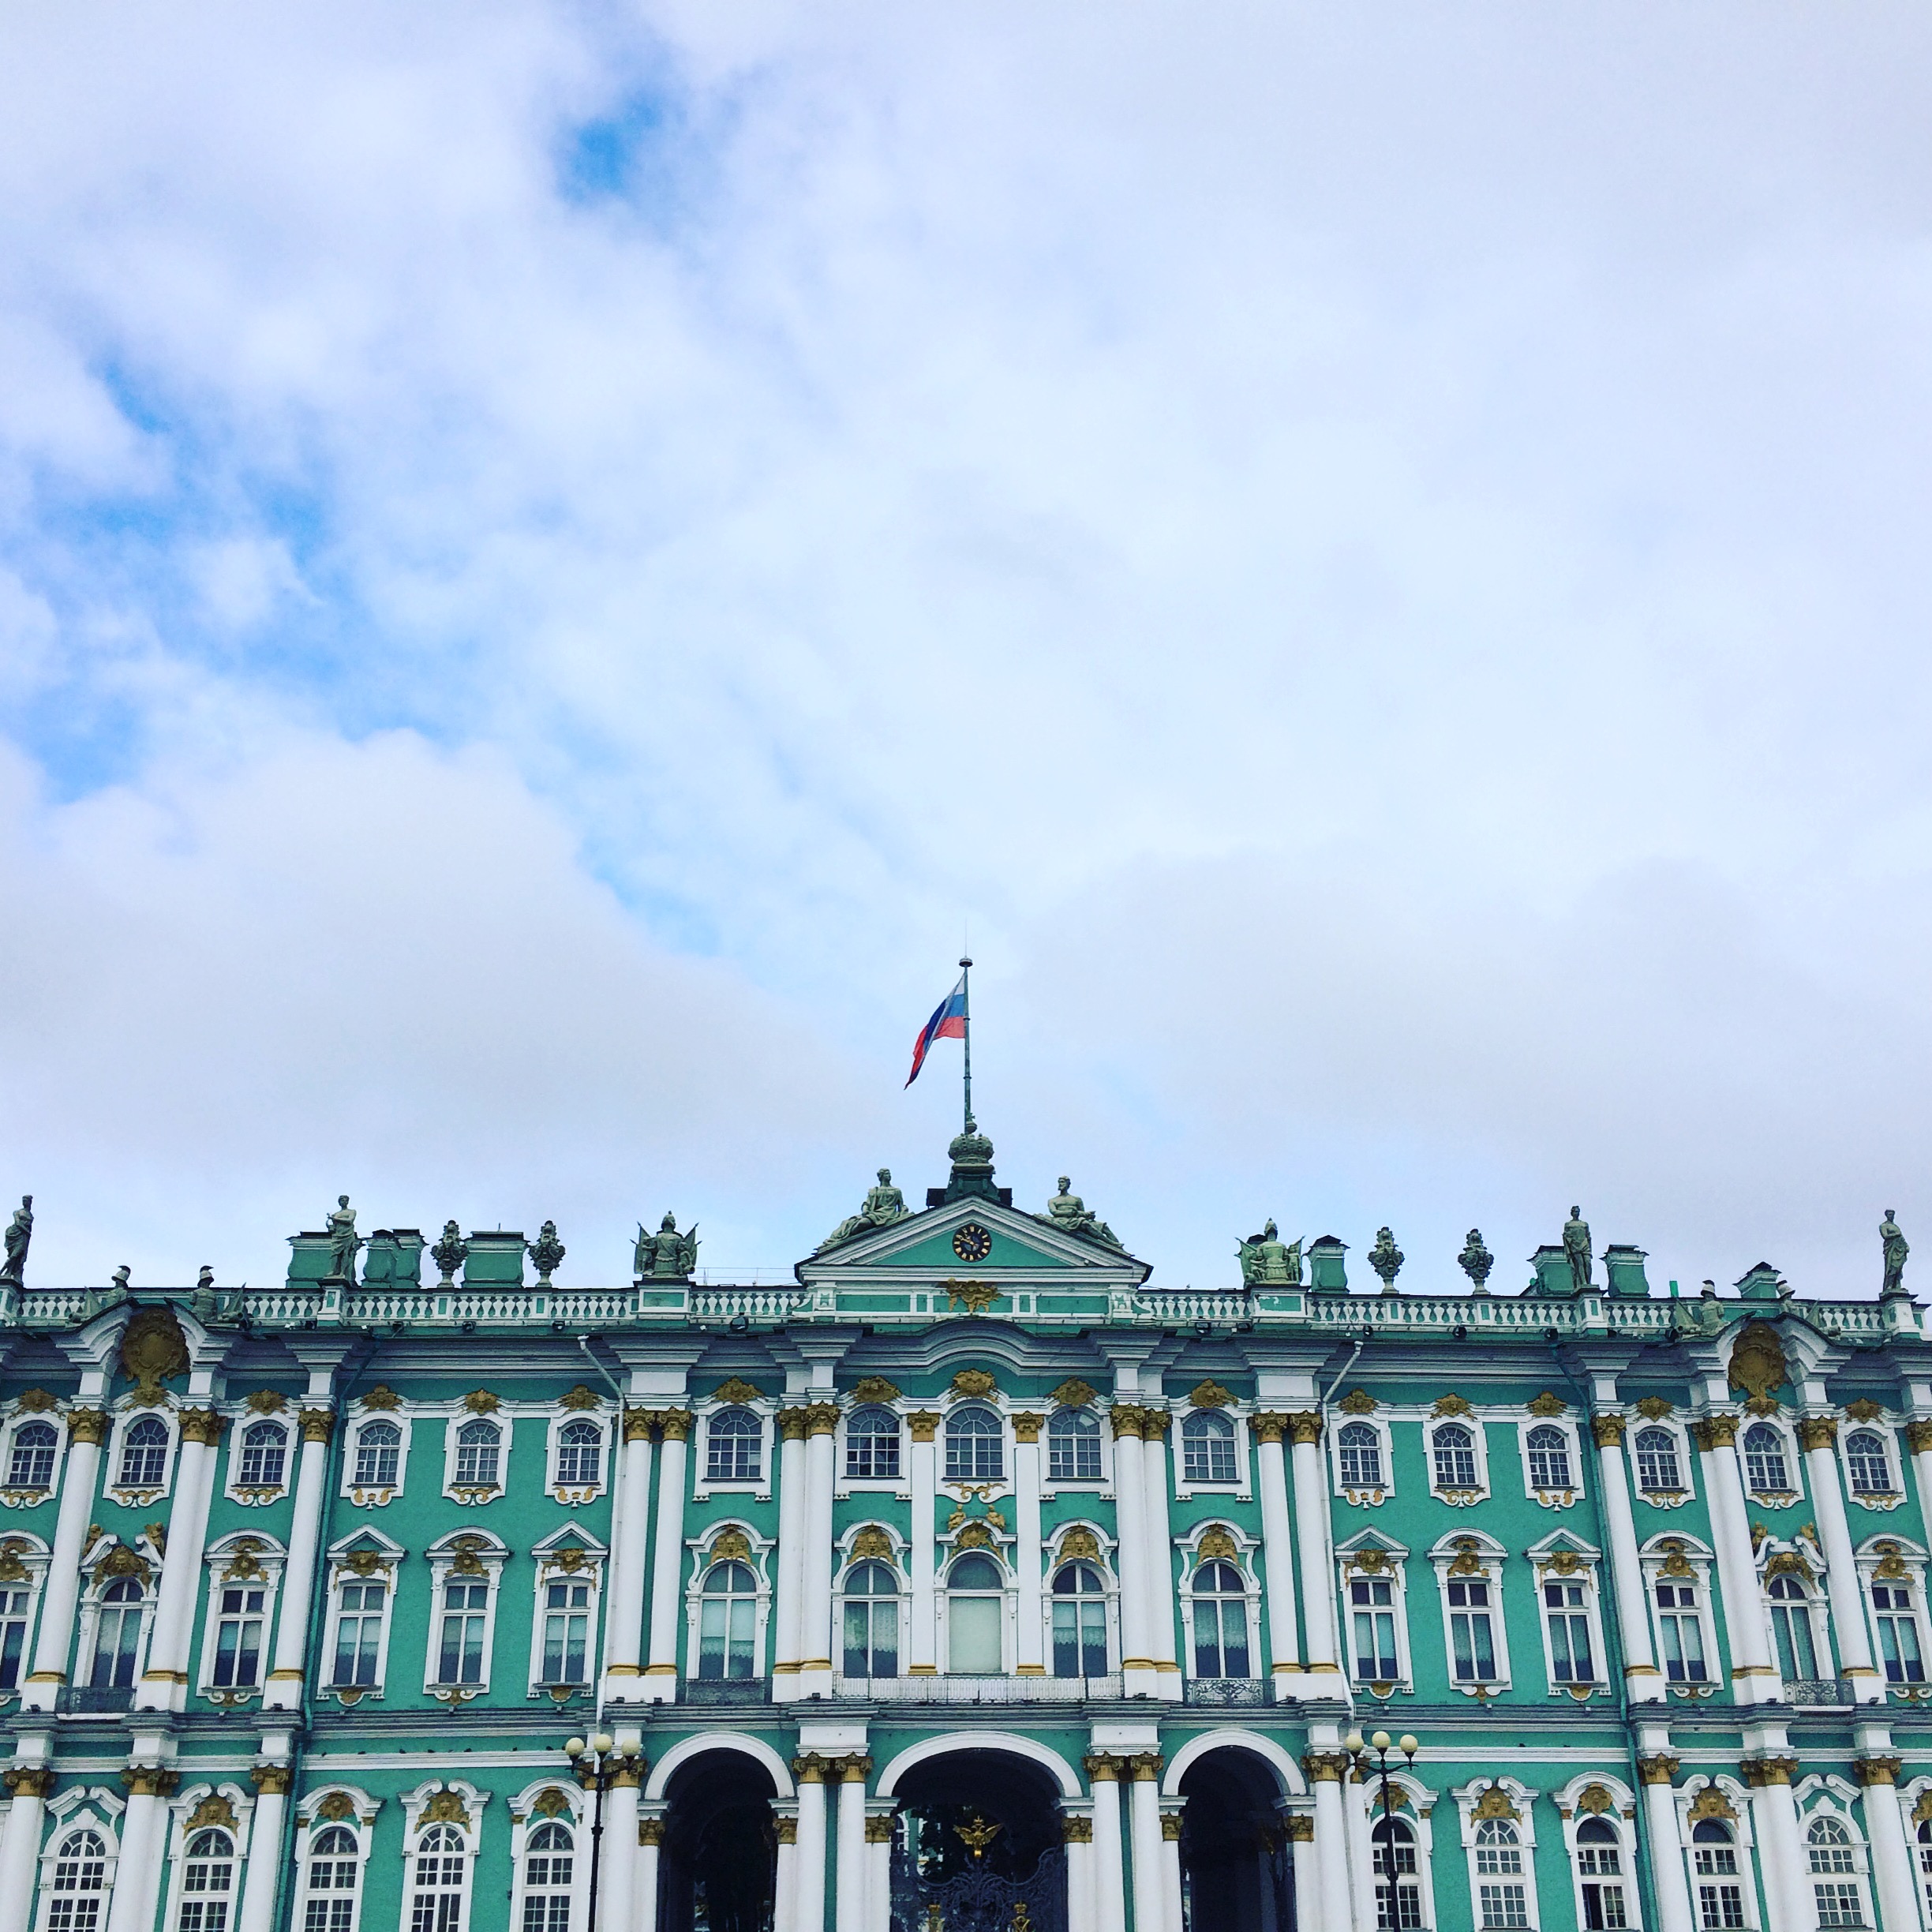 Copy of The Winter Palace, St. Petersburg, taken September 2016 by Jennifer Dasal